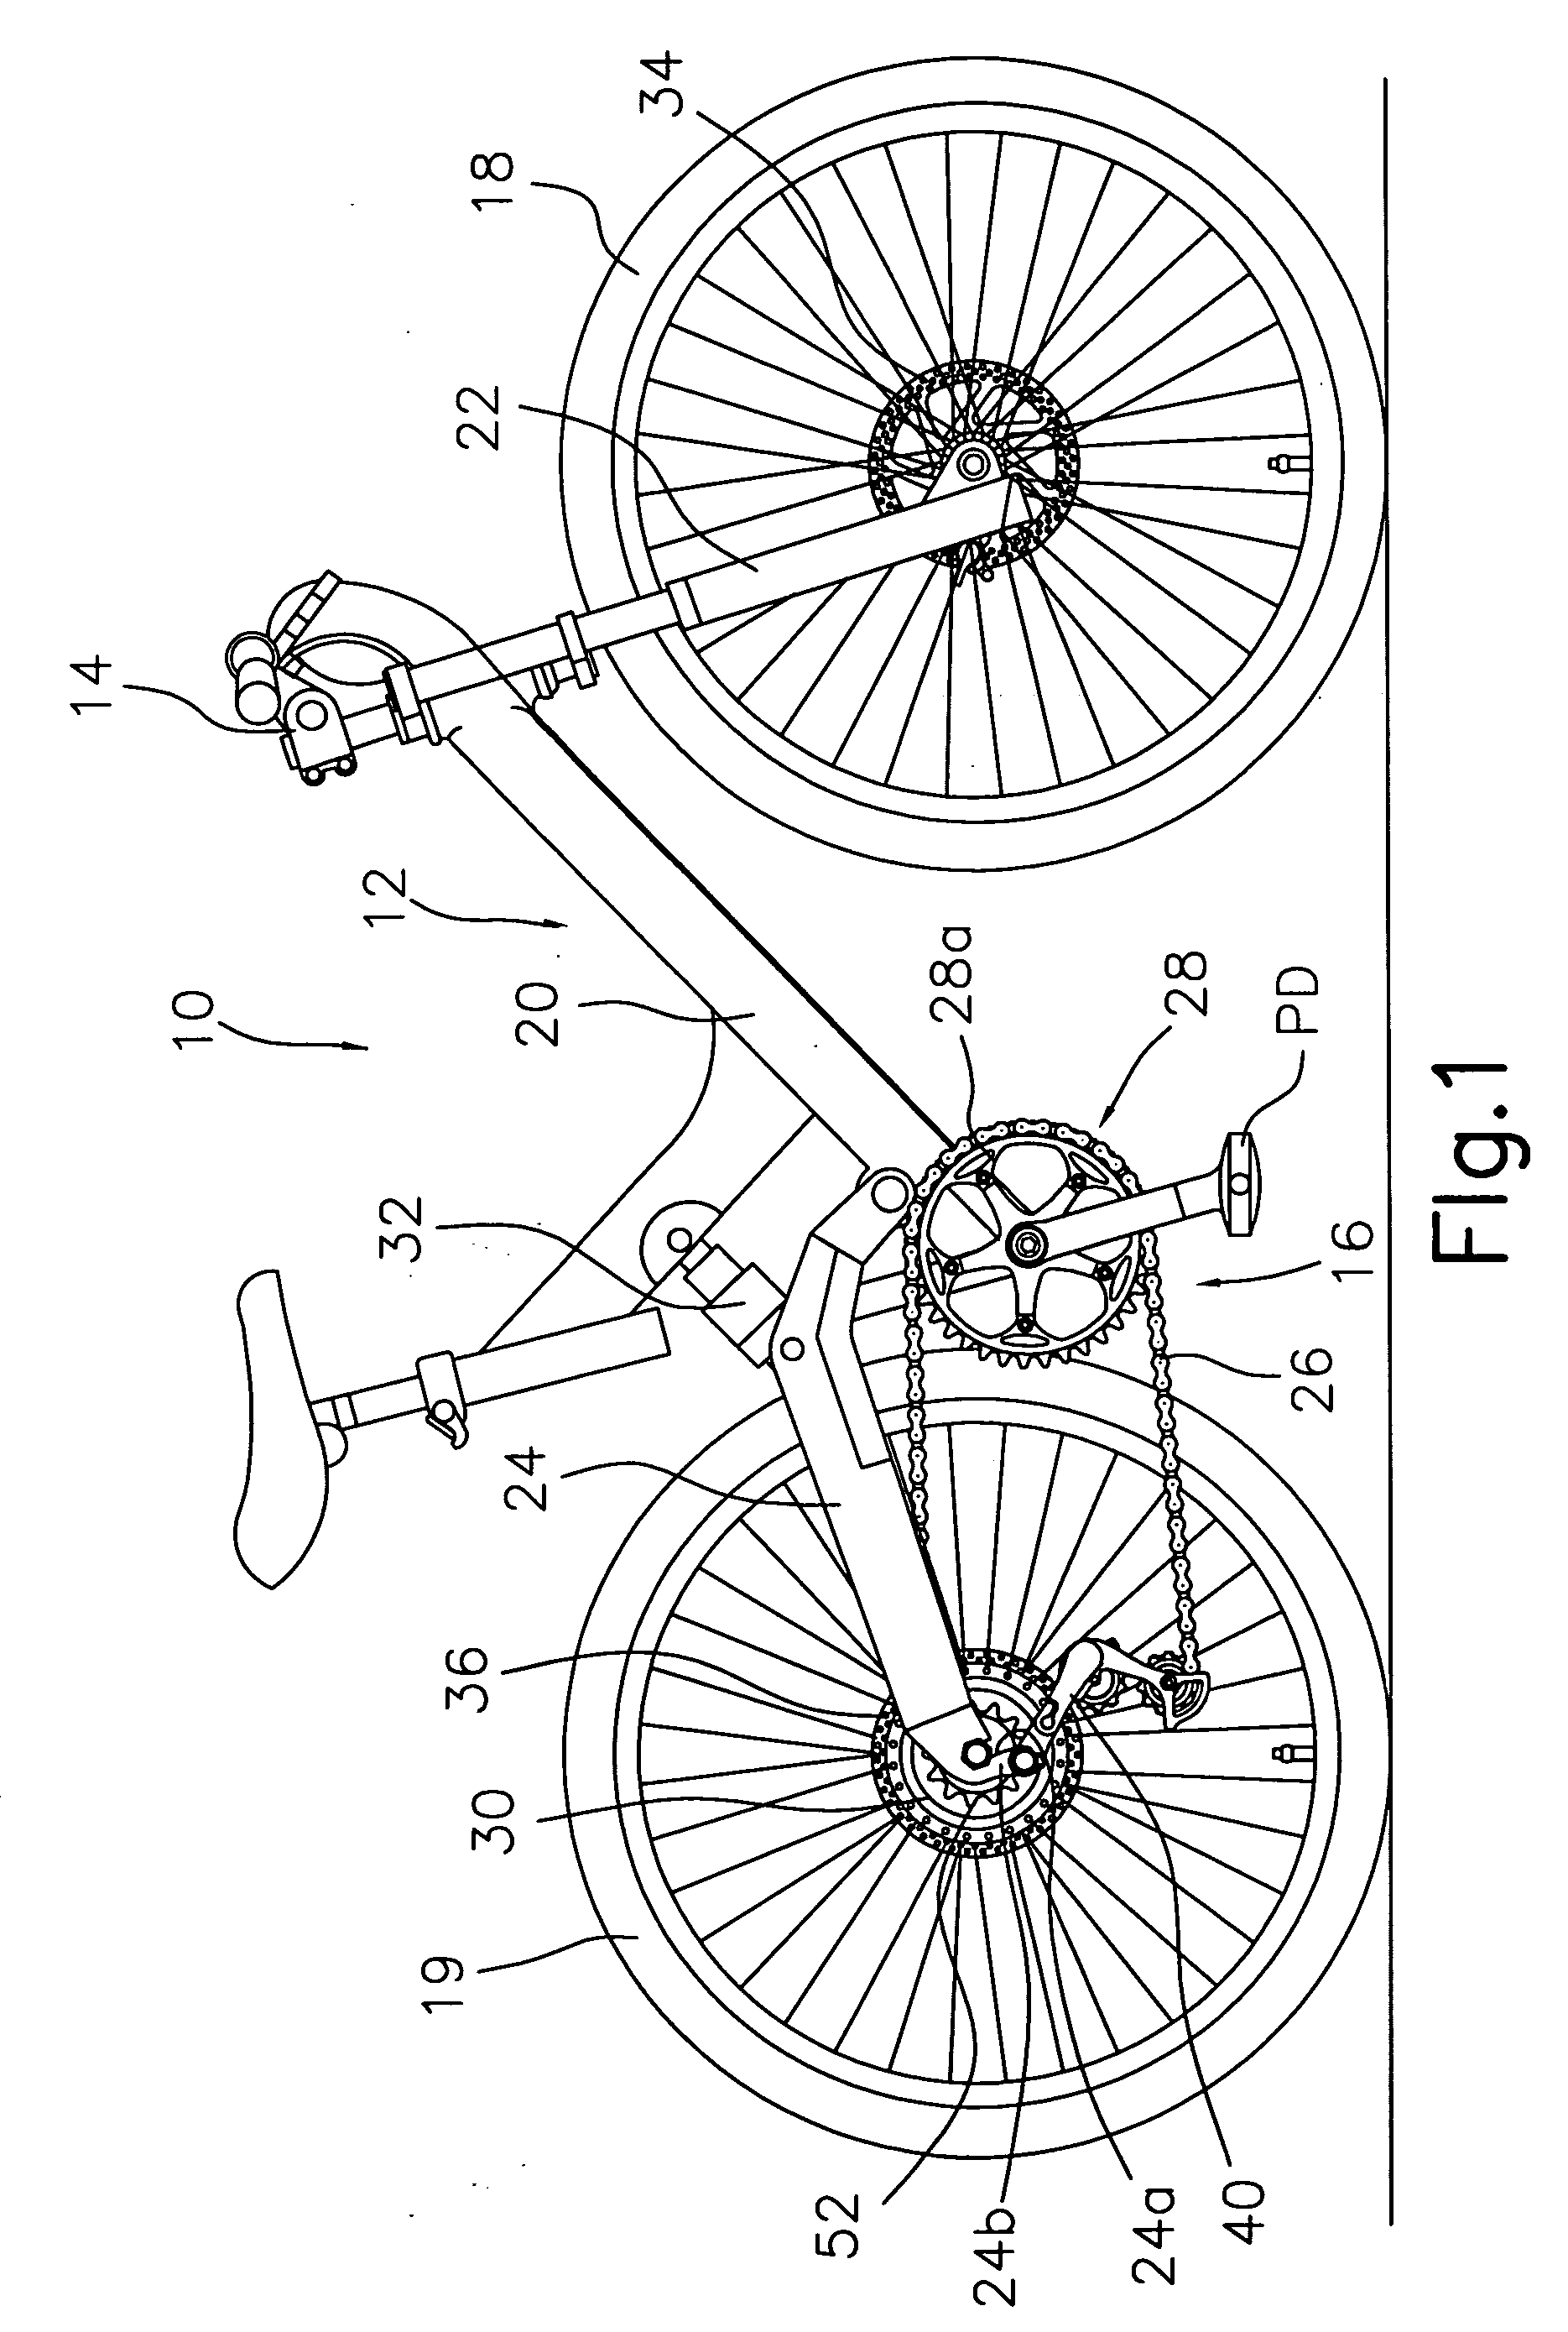 Bicycle hub cover